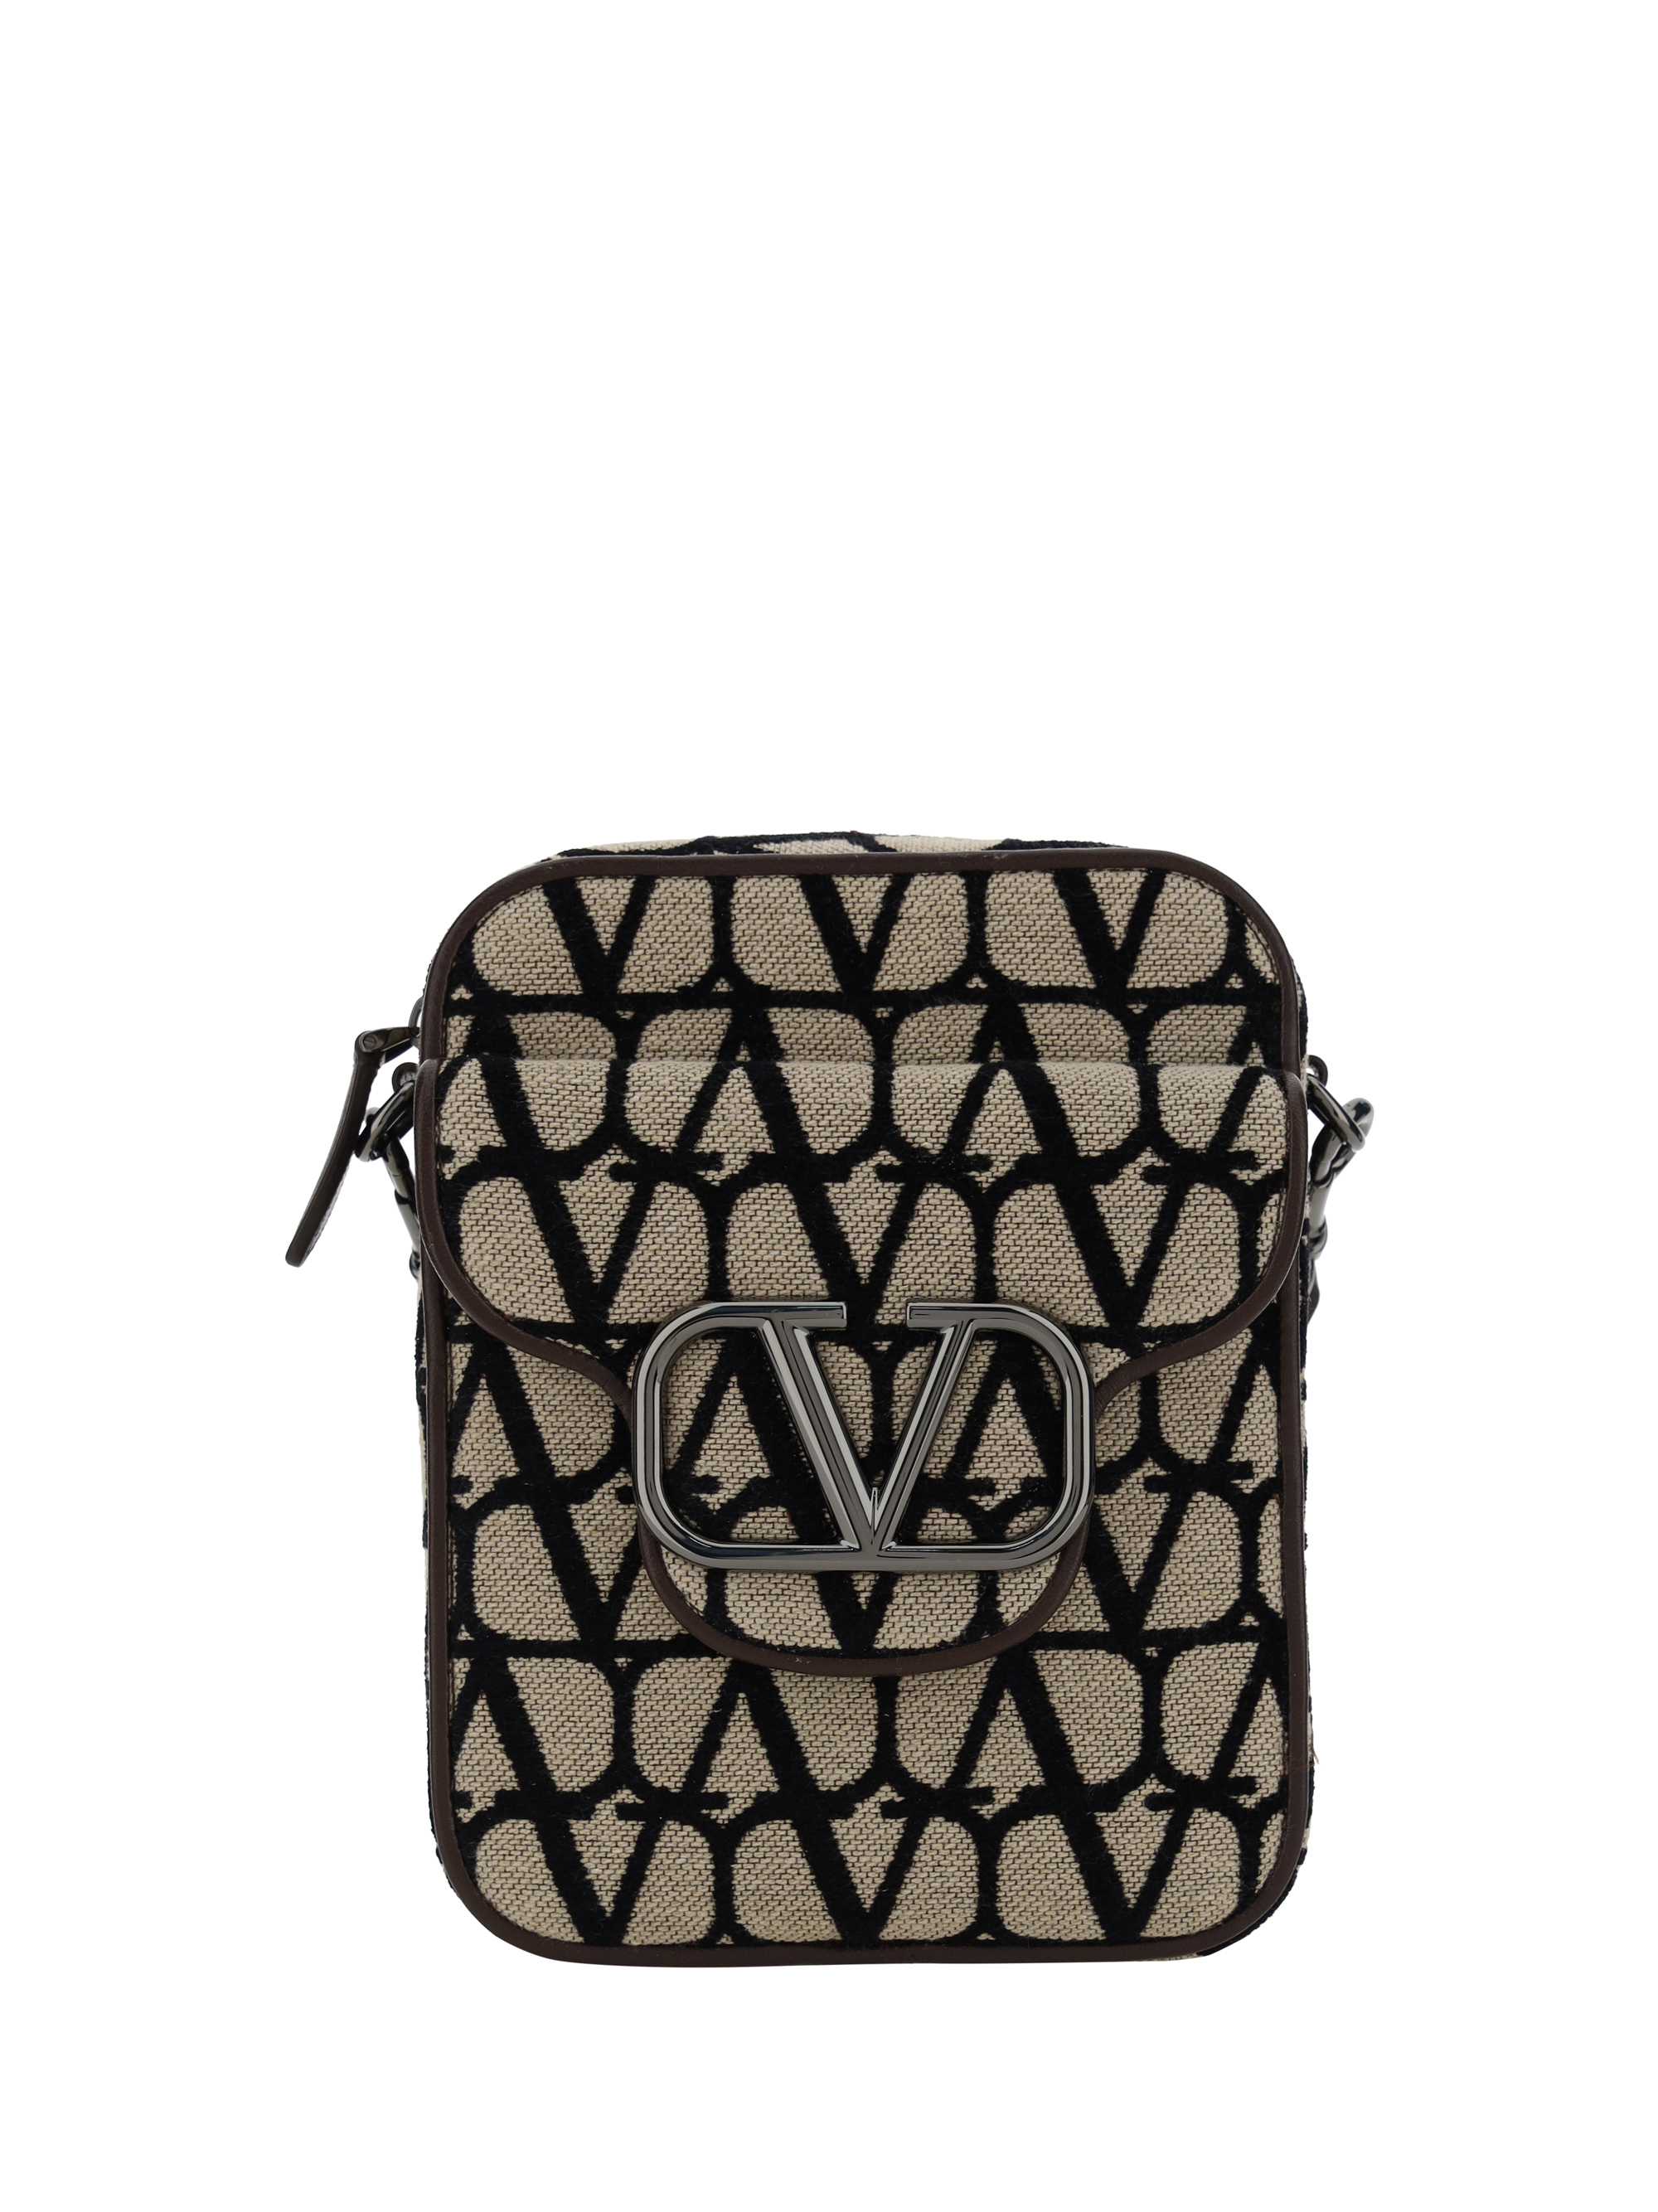 Valentino Garavani Rockstud Pet Customizable Backpack for Man in Black/sheer  Fuchsia